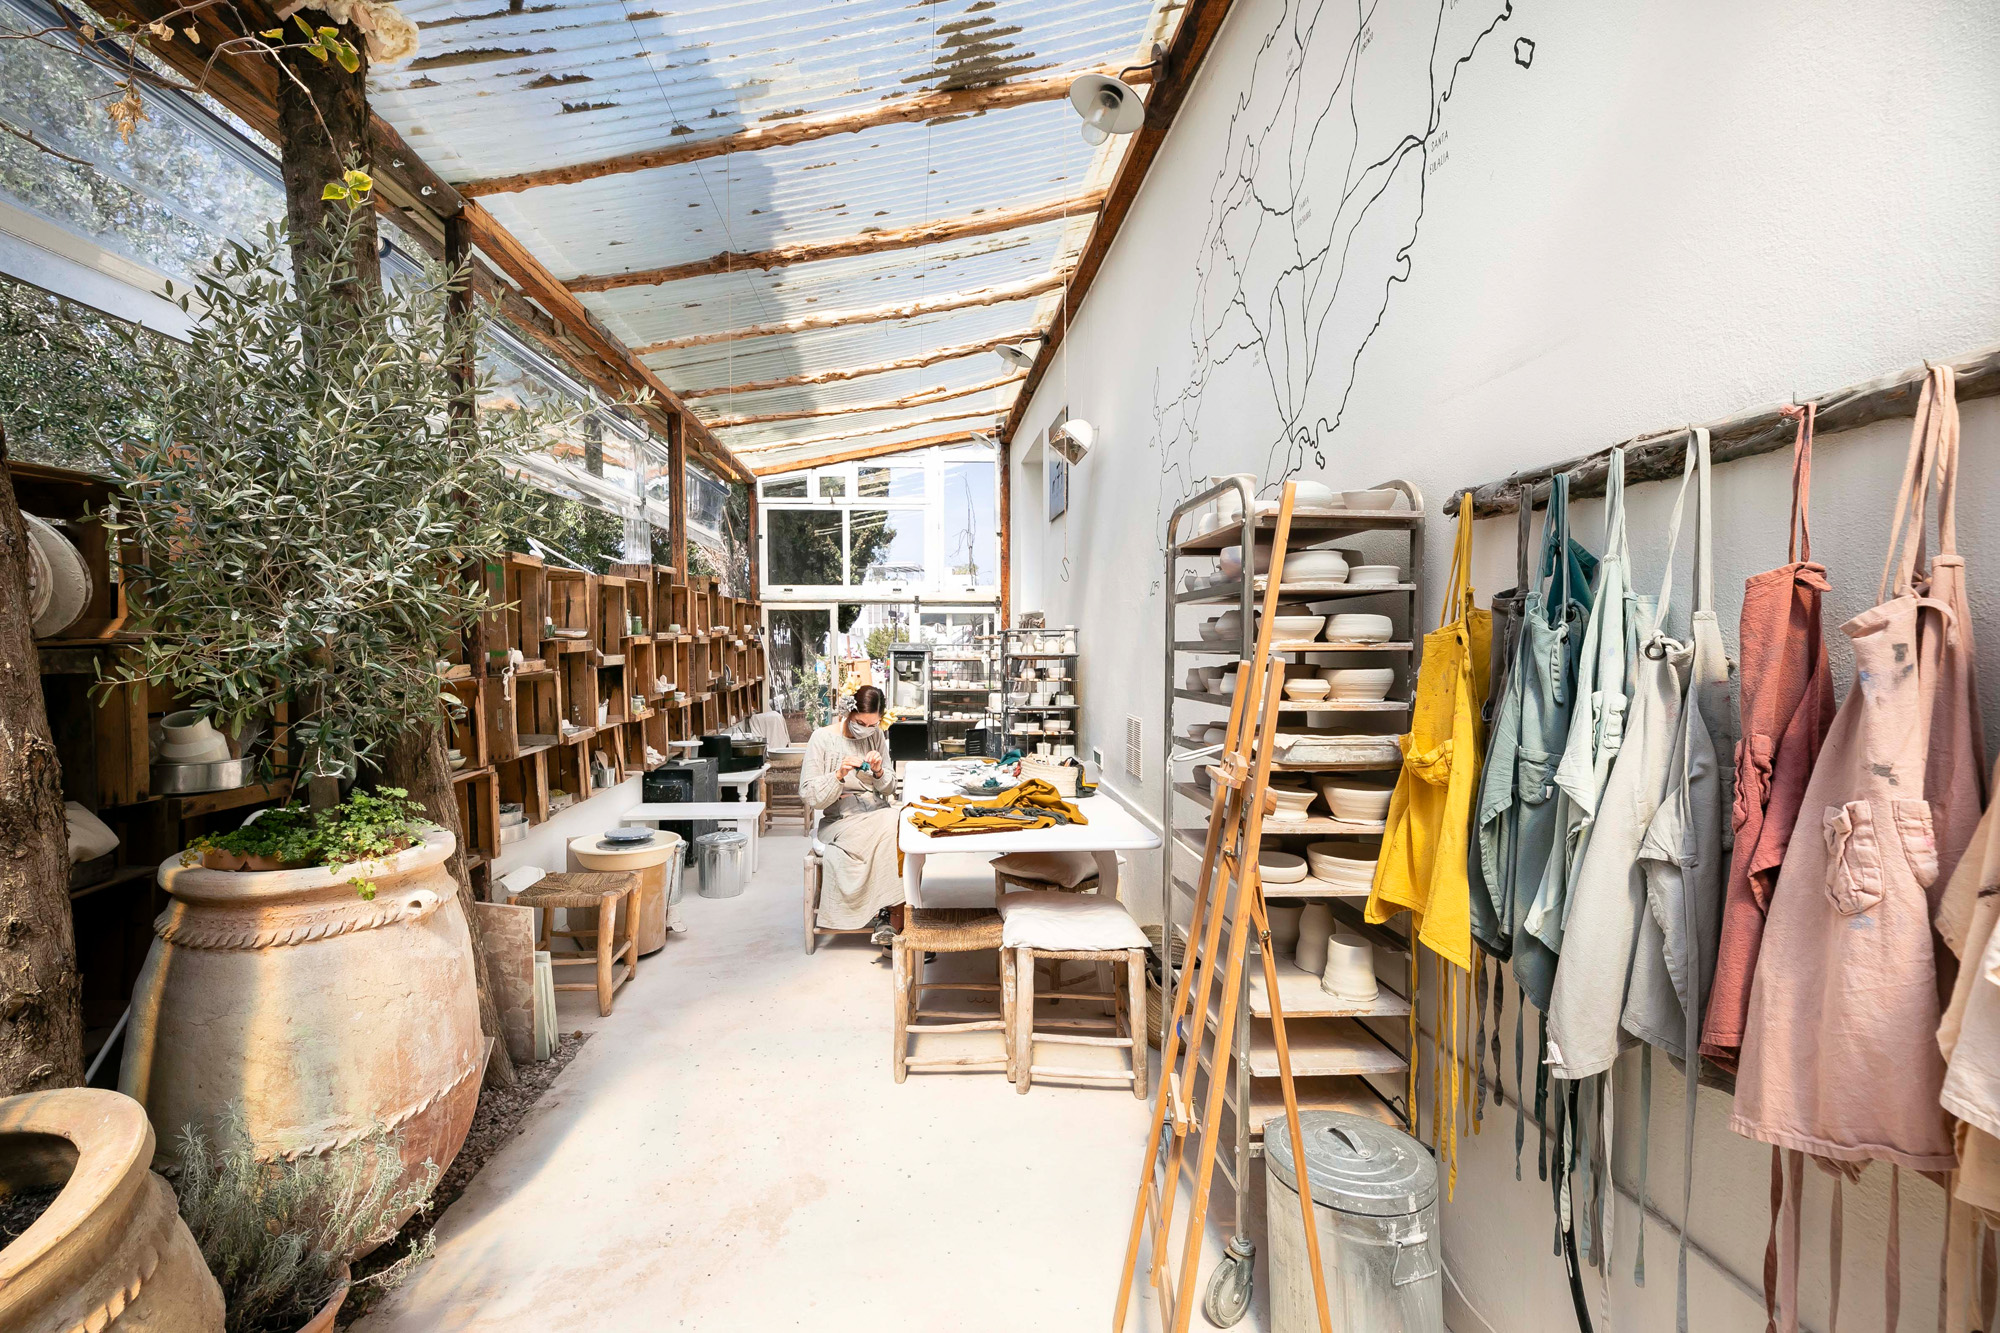 Atelier Numero 74 artisinal workshop and retail store in Santa Gertrudis Ibiza